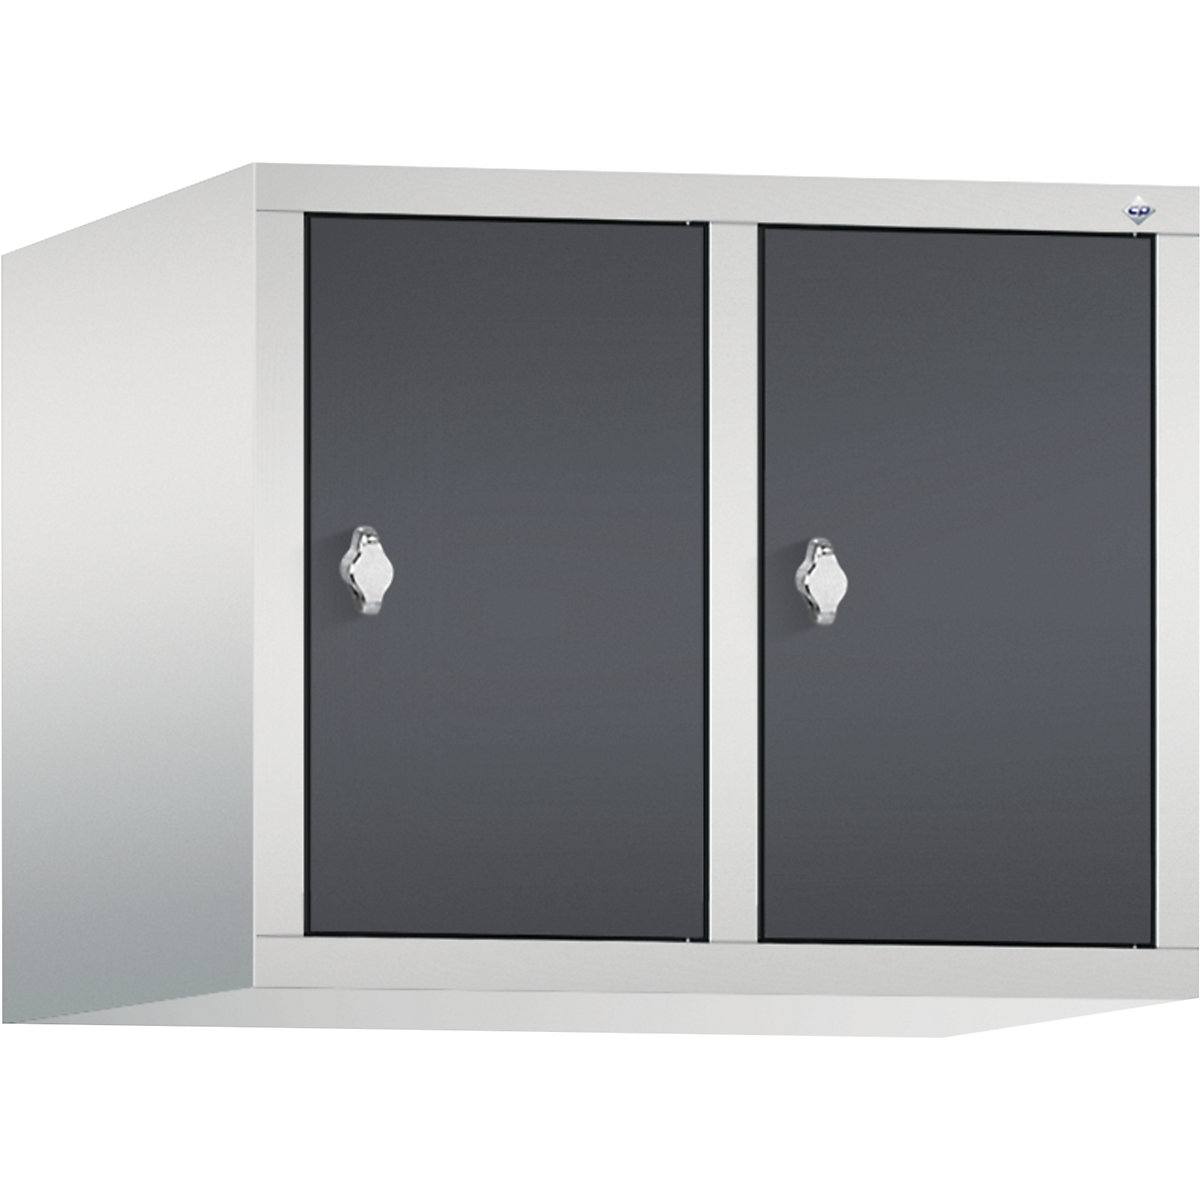 Altillo CLASSIC – C+P, 2 compartimentos, anchura de compartimento 300 mm, gris luminoso / gris negruzco-10